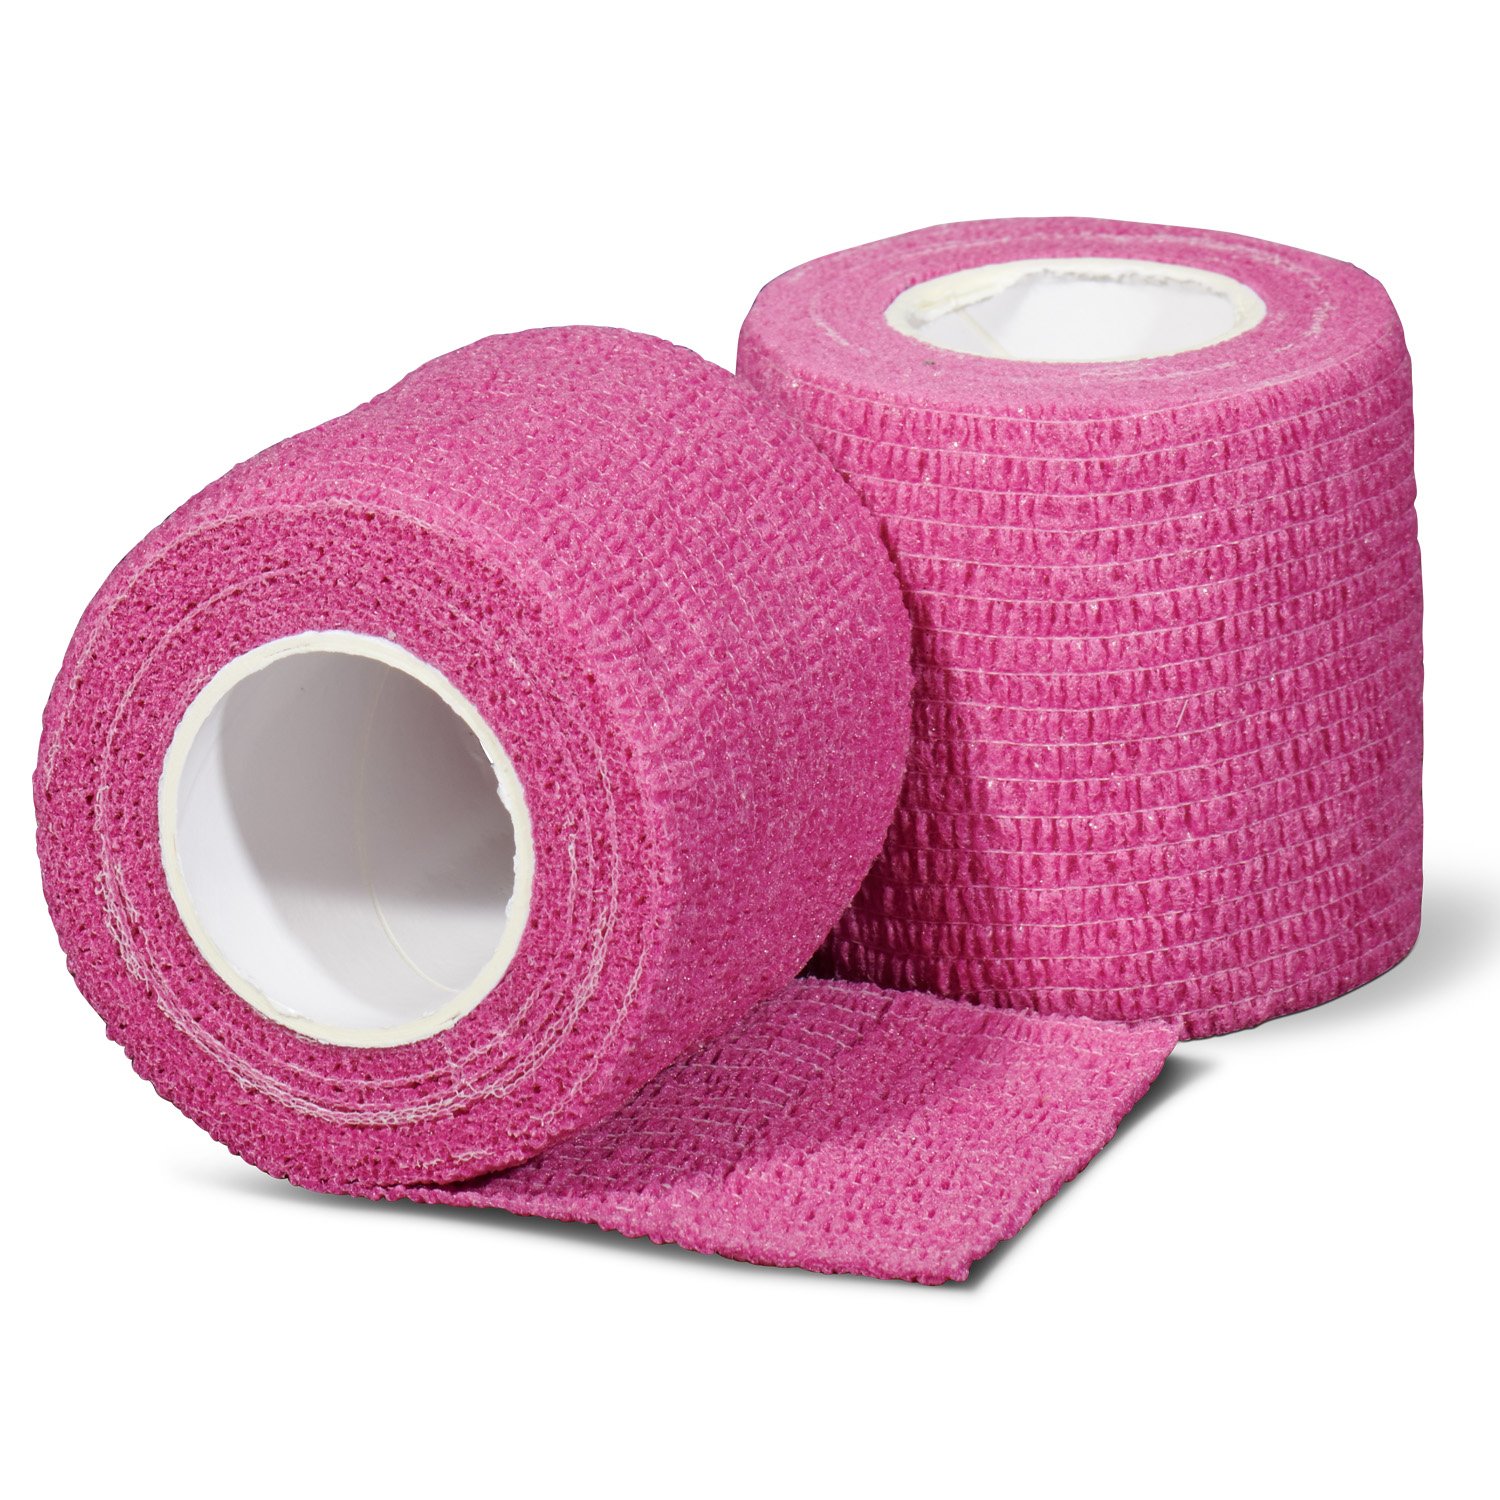 gladiator sports underwrap bandage per 20 rolls pink